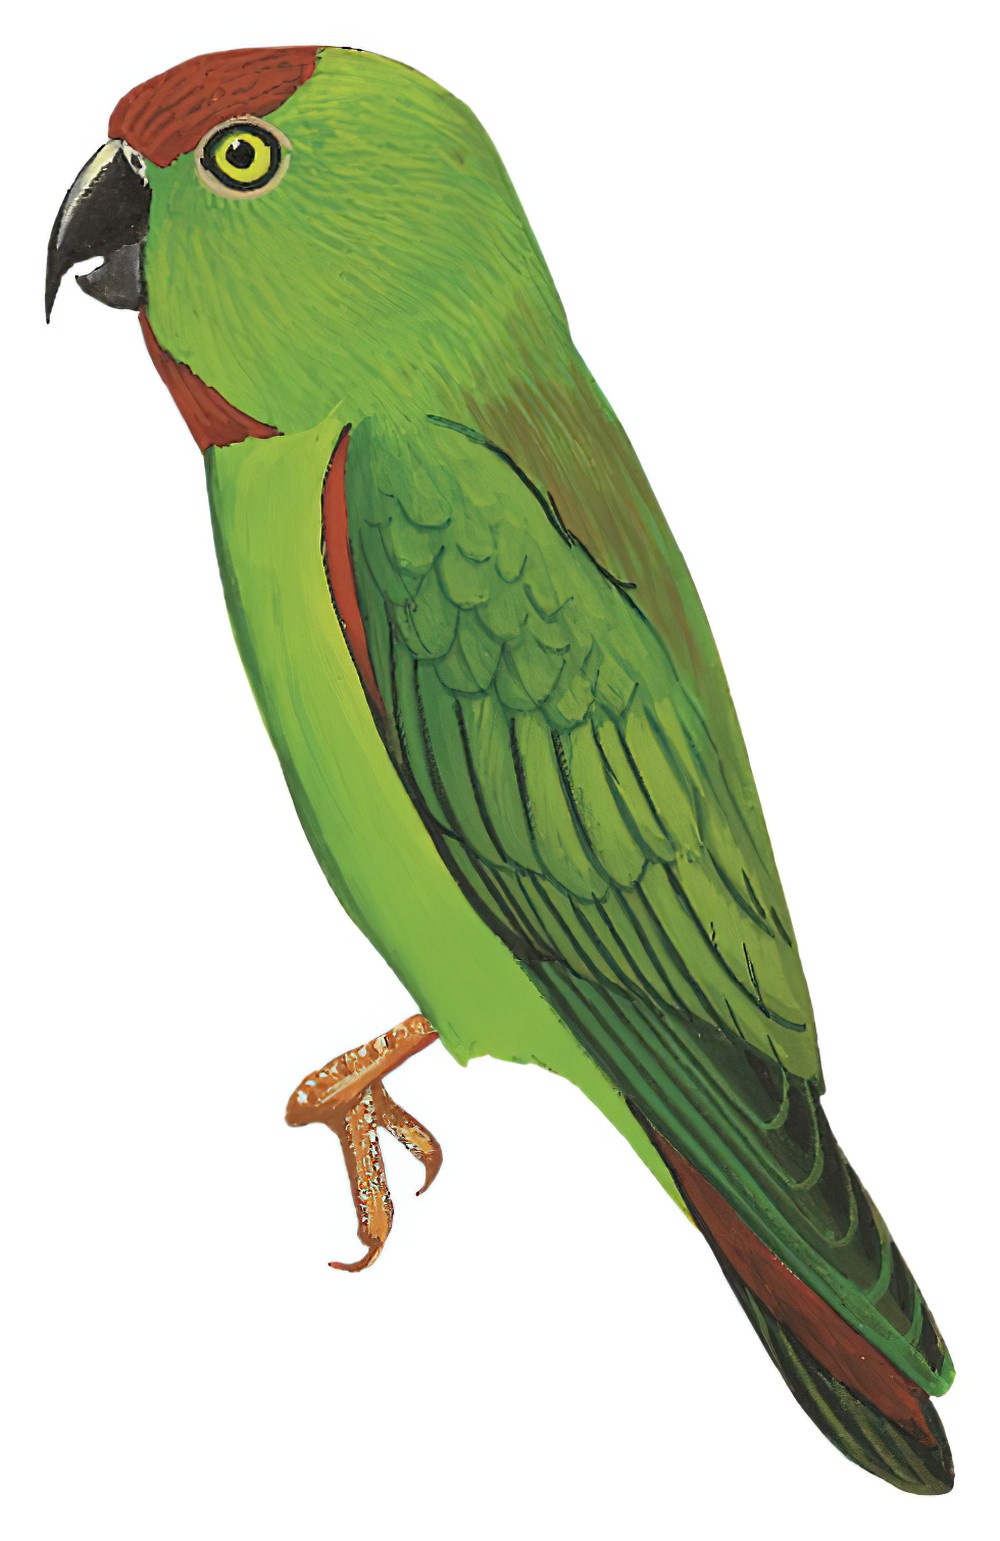 Sulawesi Hanging-Parrot / Loriculus stigmatus